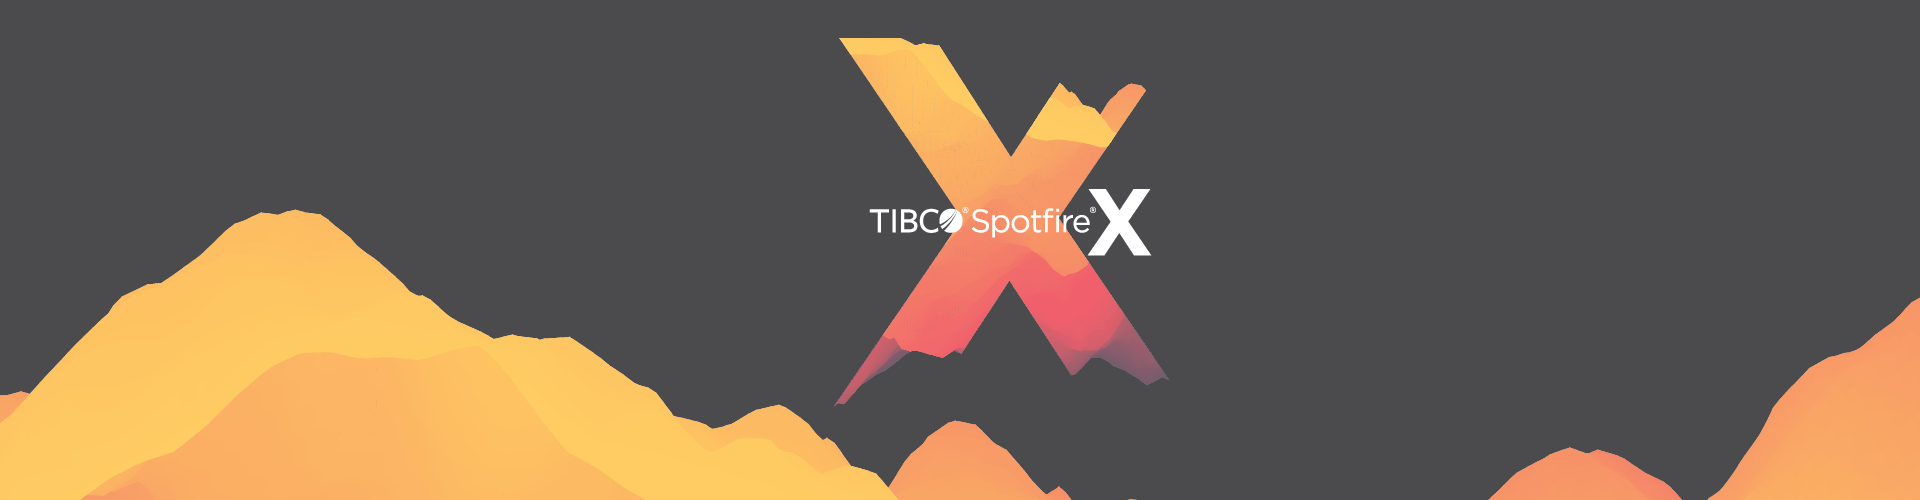 TIBCO Logo - TIBCO Spotfire Data Visualization and Analytics Software | TIBCO ...